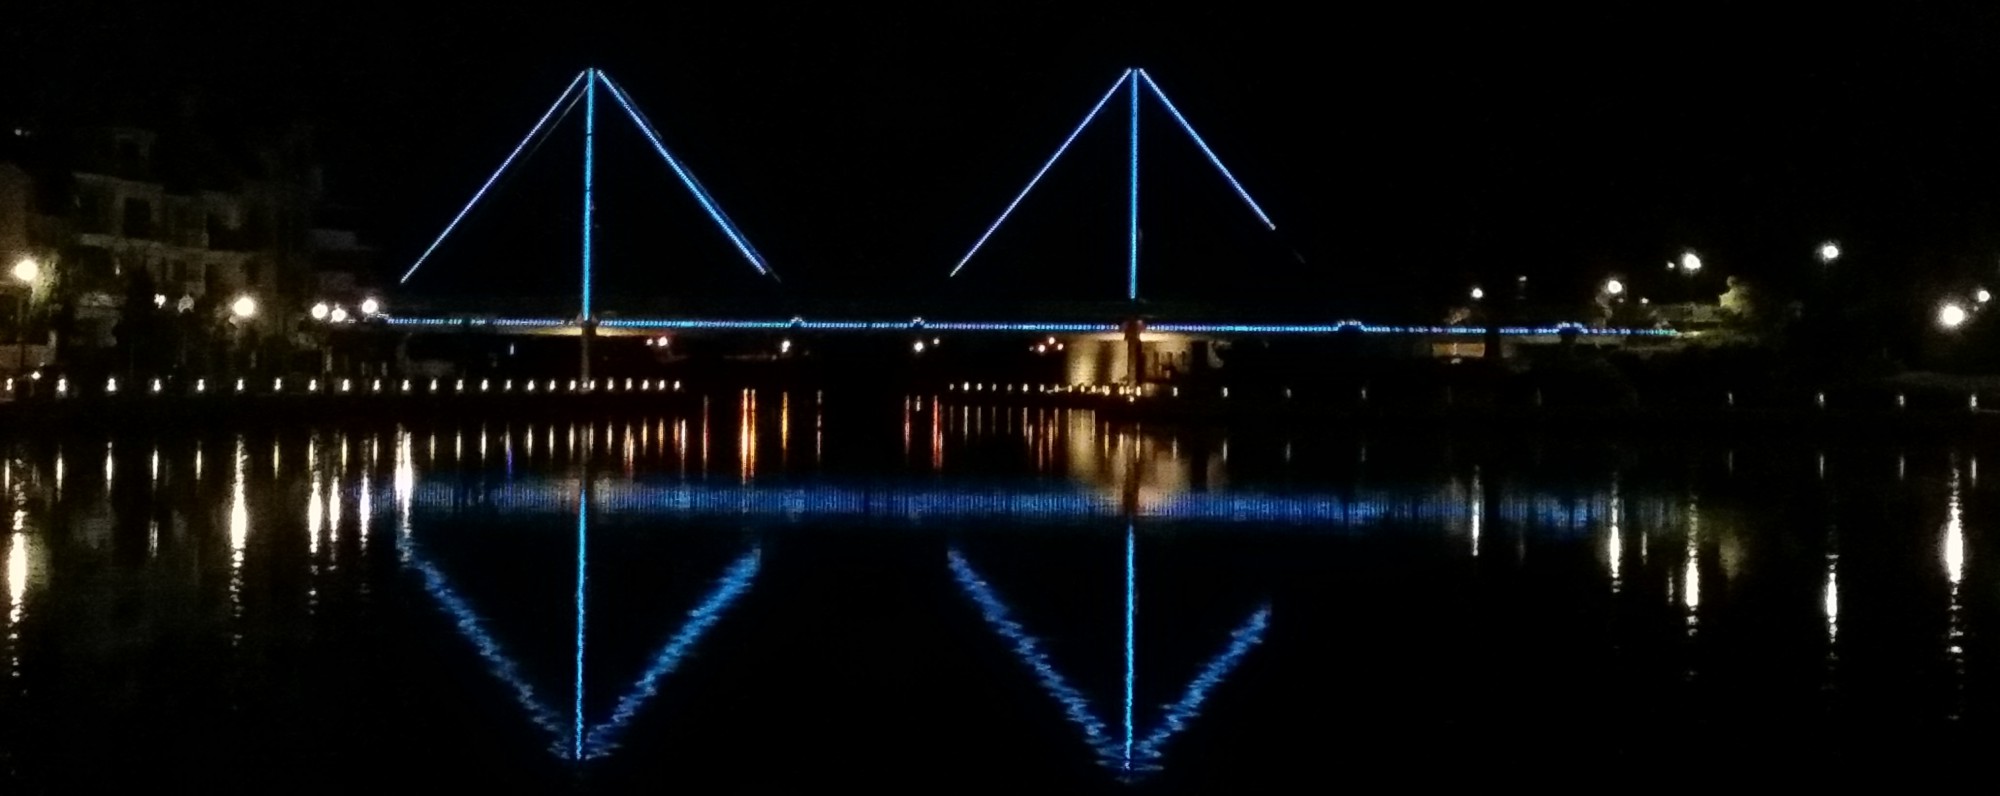 Tonight the Bridge is Blue